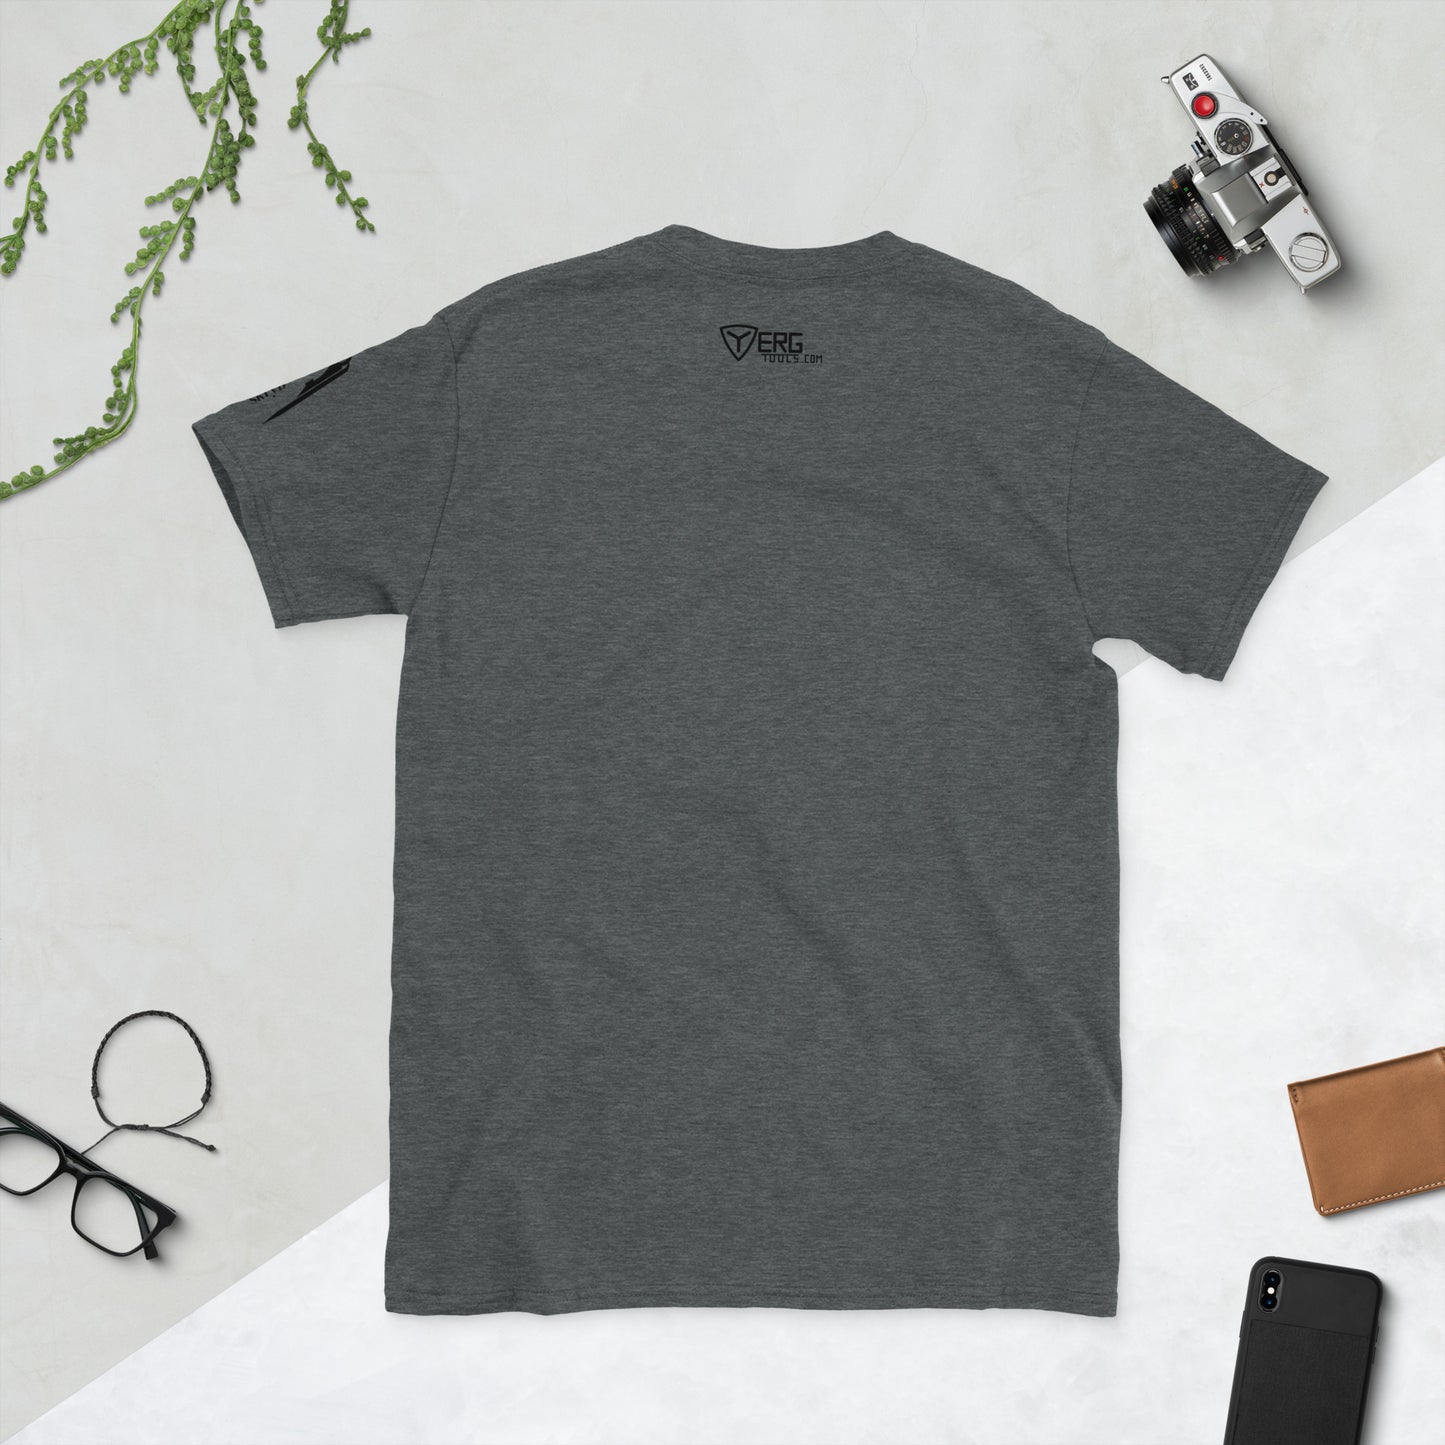 Yerg Tools Skrȳb Definition - Unisex T-Shirt